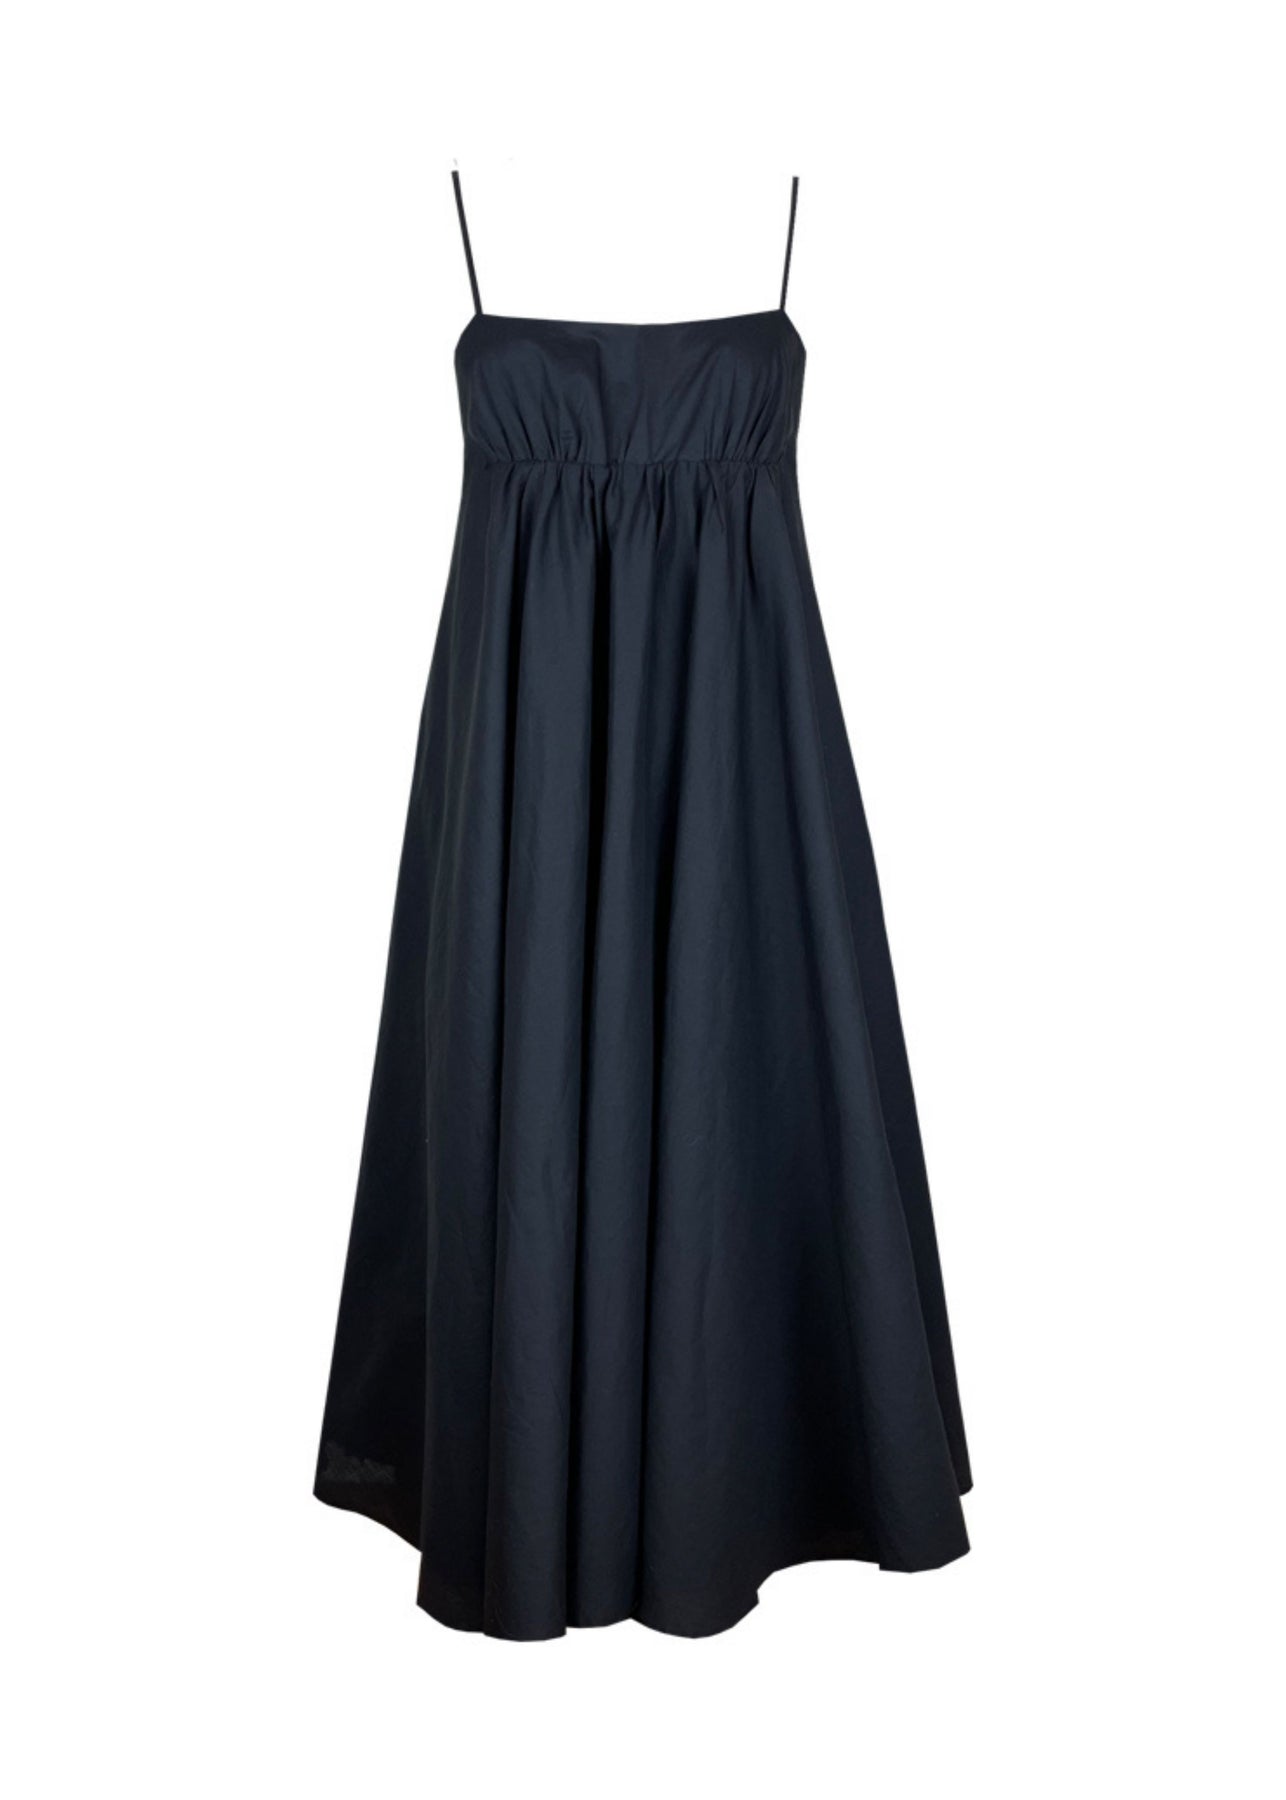 Amalfi dress, black – Rue Saint Paul